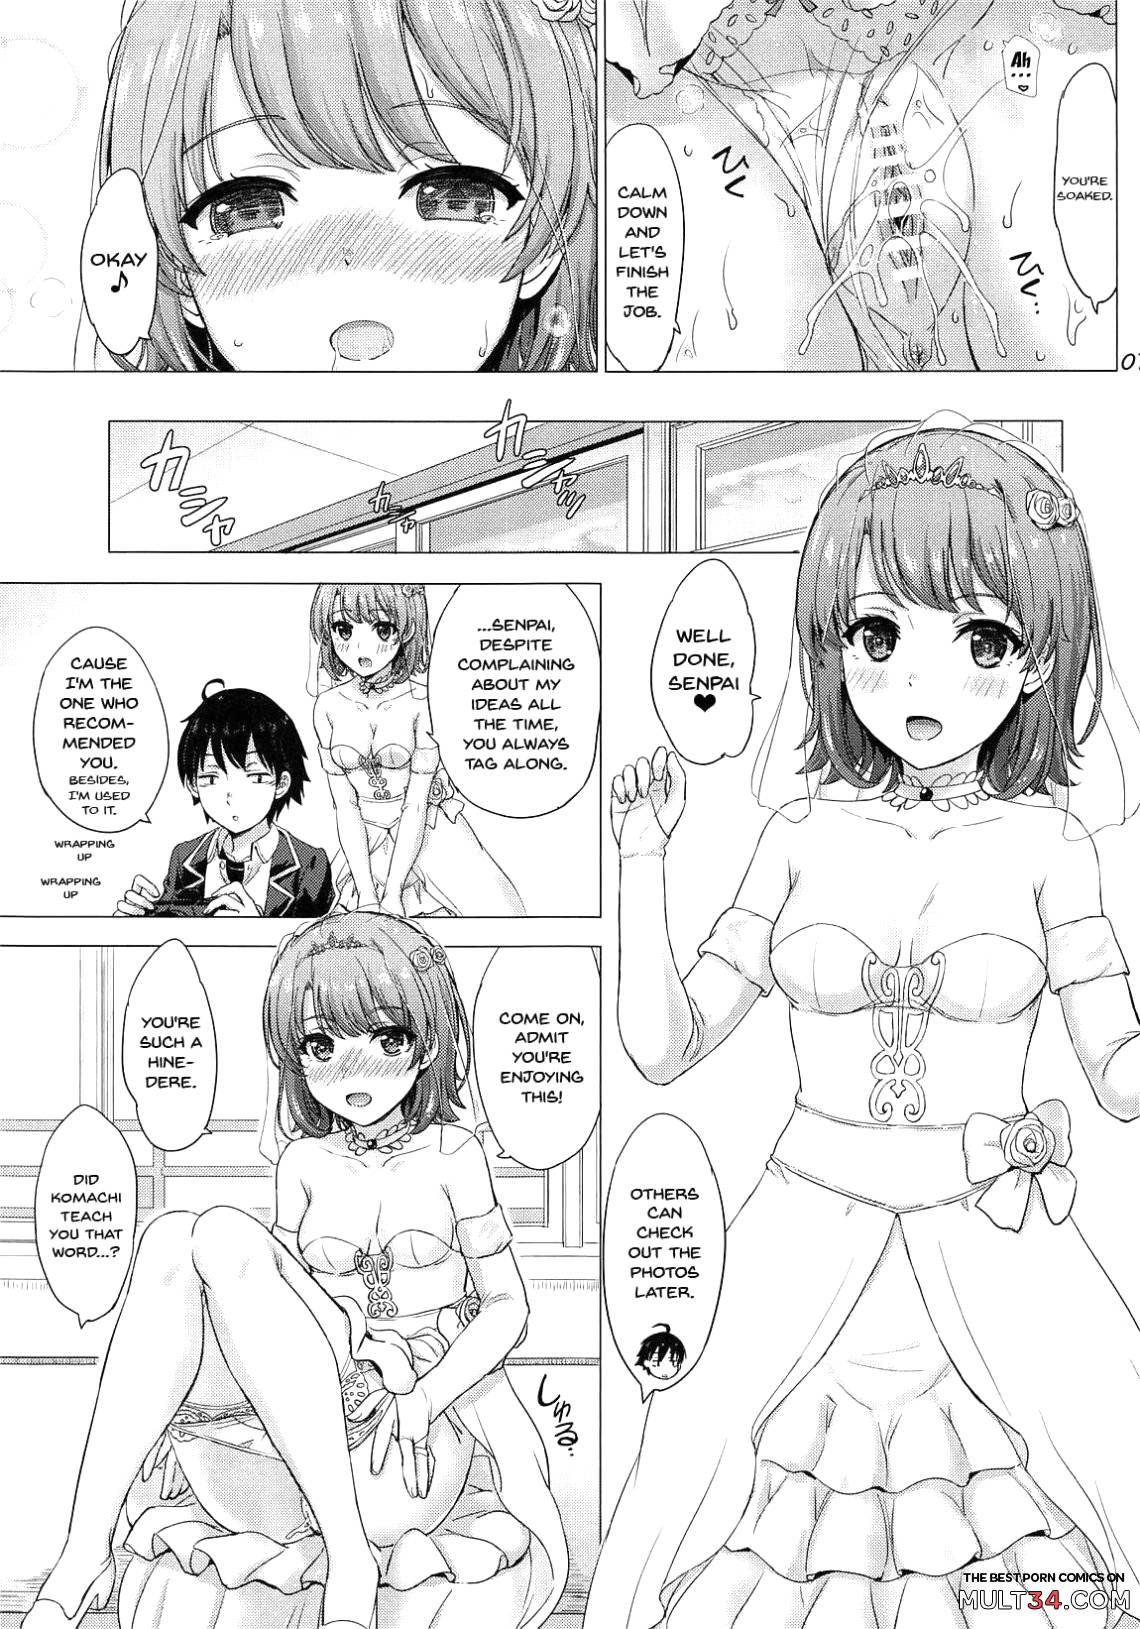 Wedding Irohasu! - Iroha's gonna marry you after today's scholl! page 6